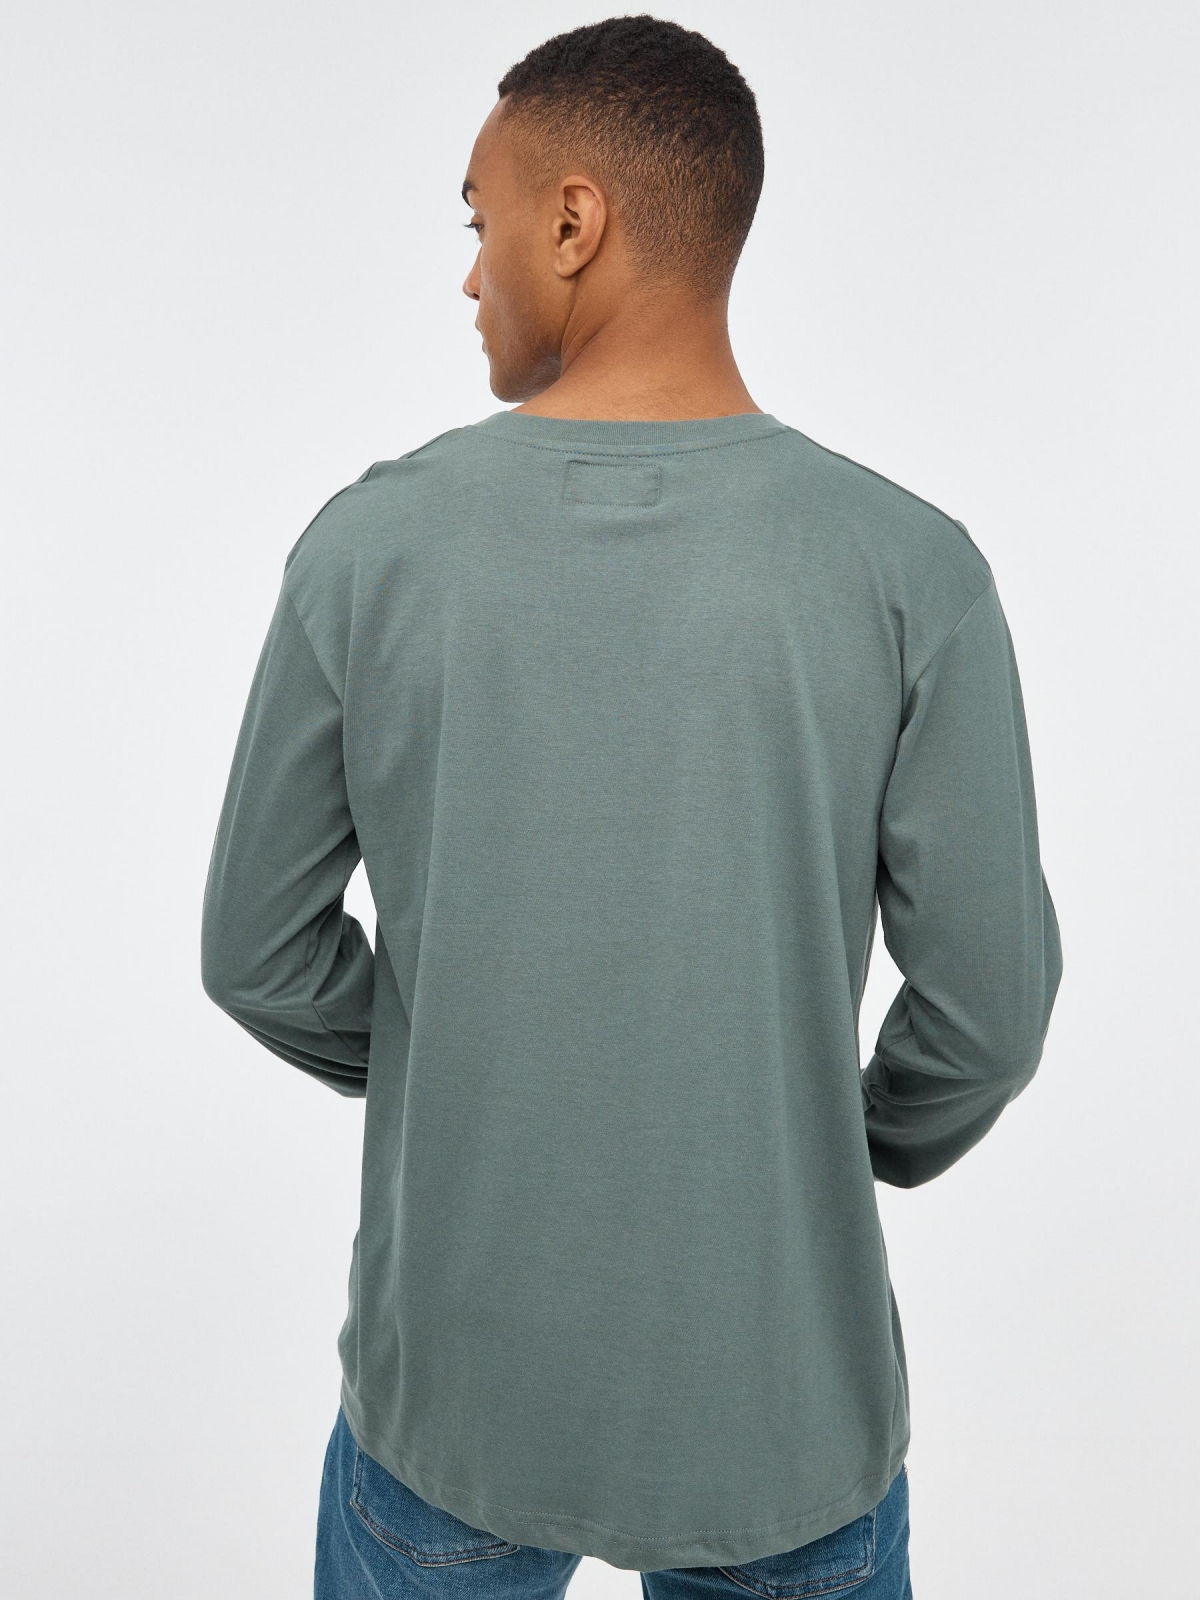 Camiseta print Power en manga verde grisáceo vista media trasera